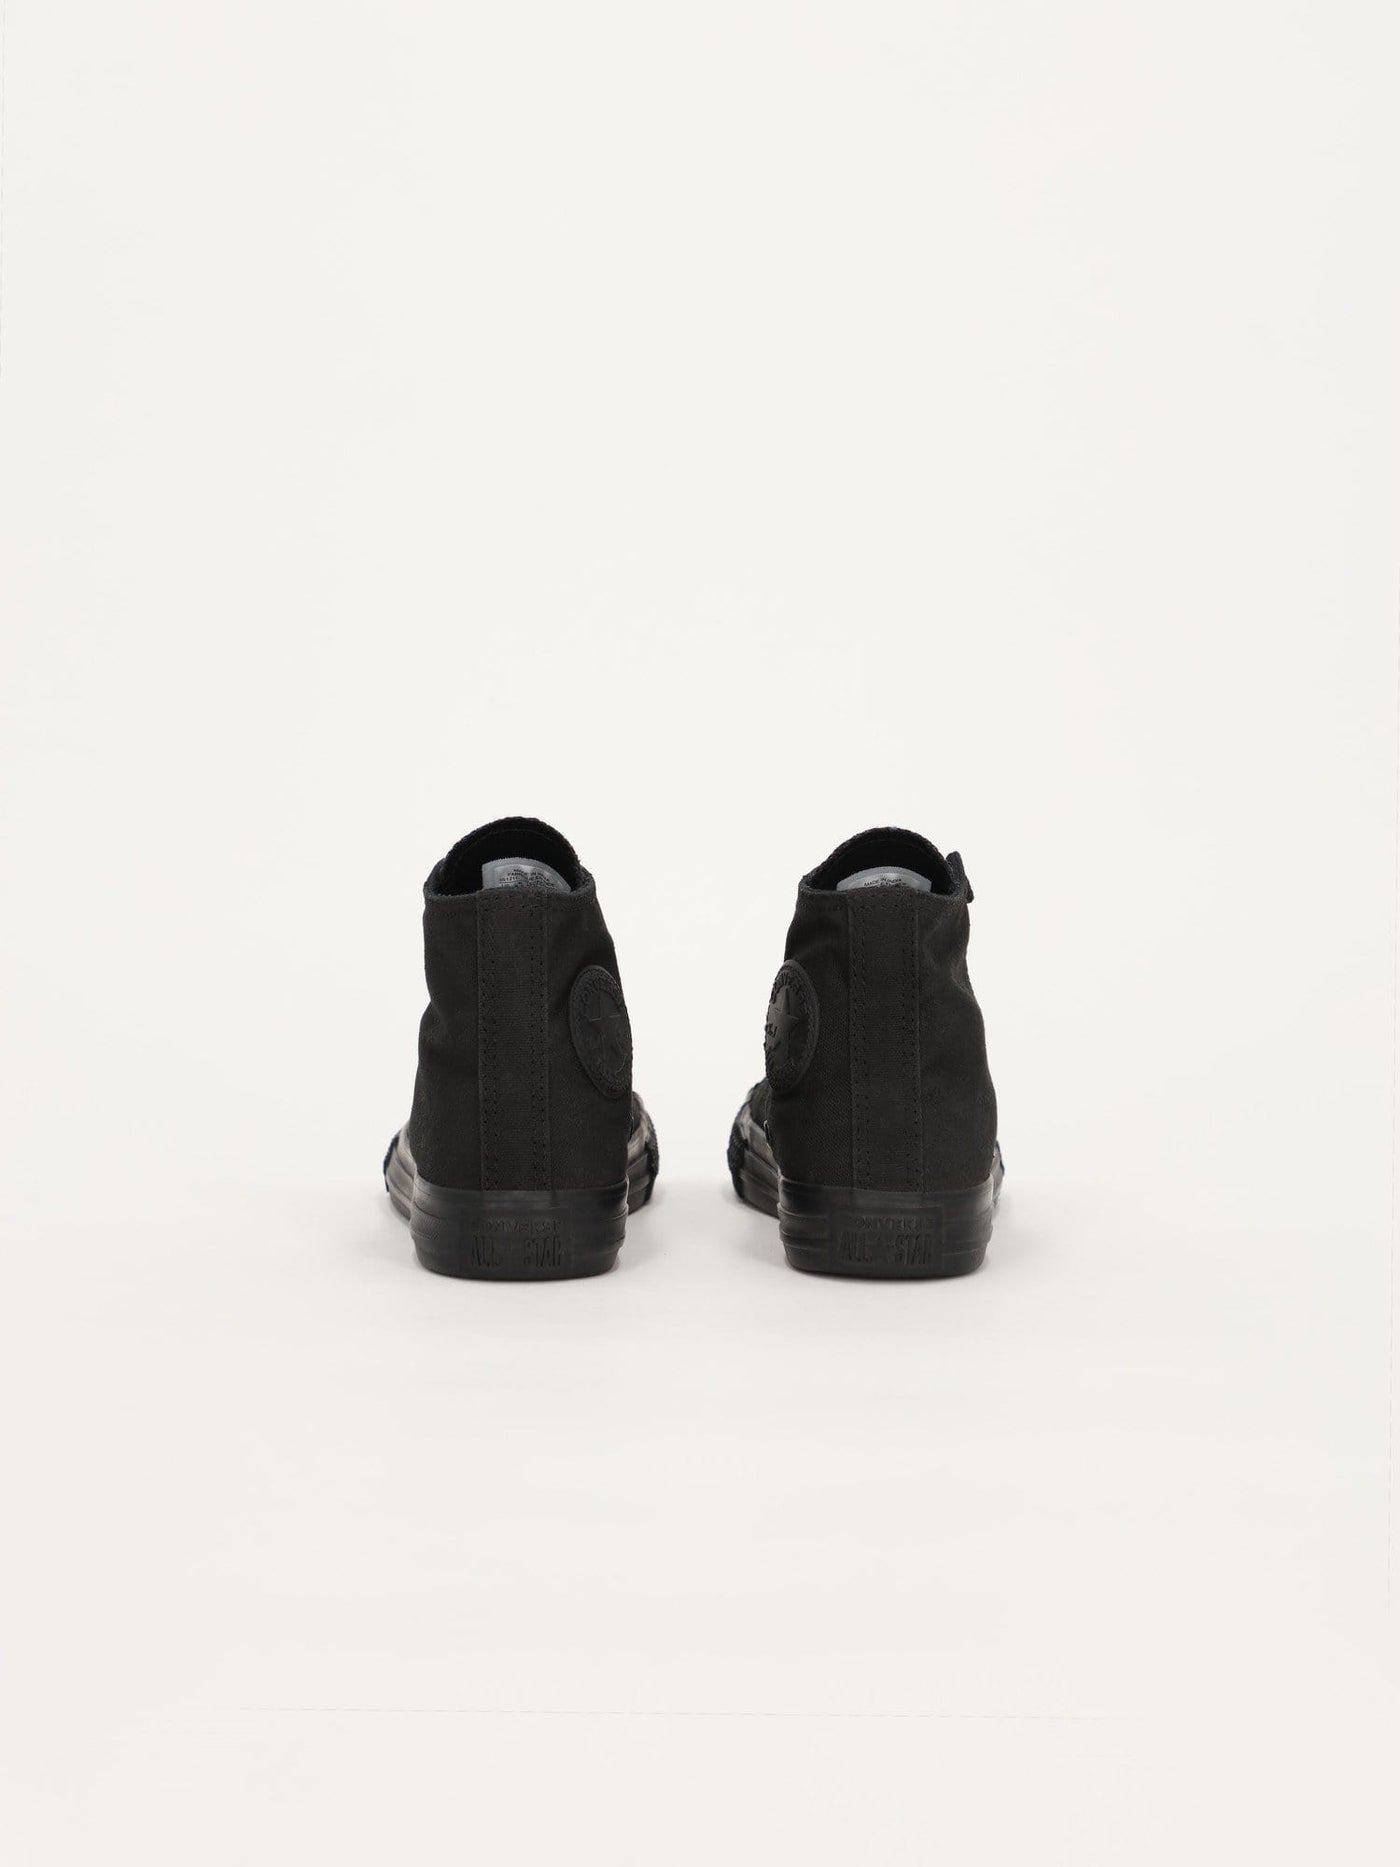 Converse Footwear Kids Chuck Taylor All Star Black Sneakers - 3S121